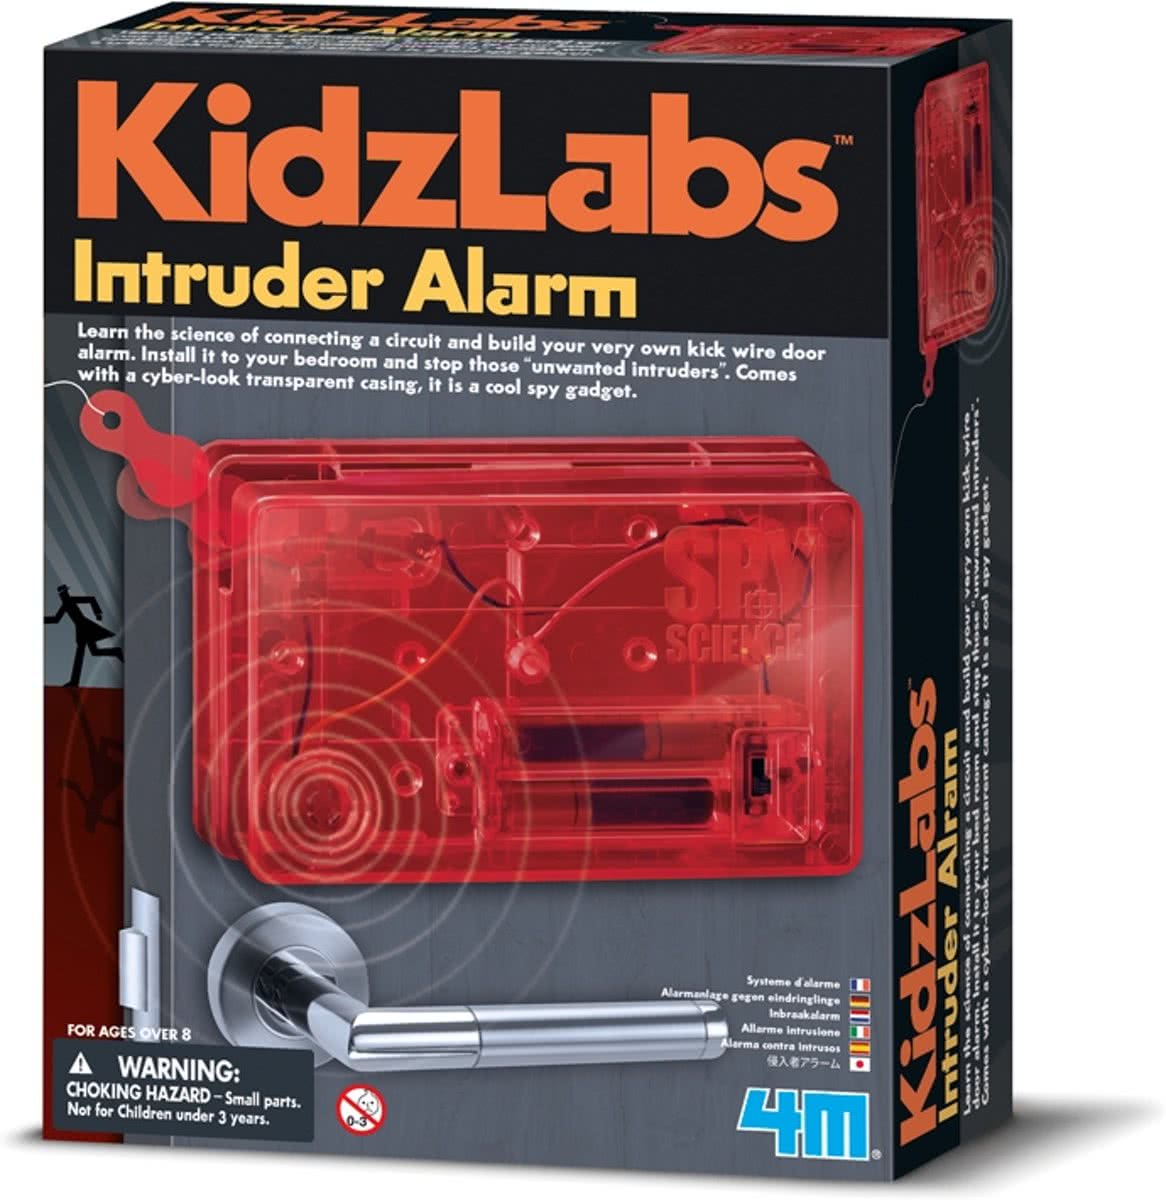 4M Kidzlabs Spy Science - Alarm